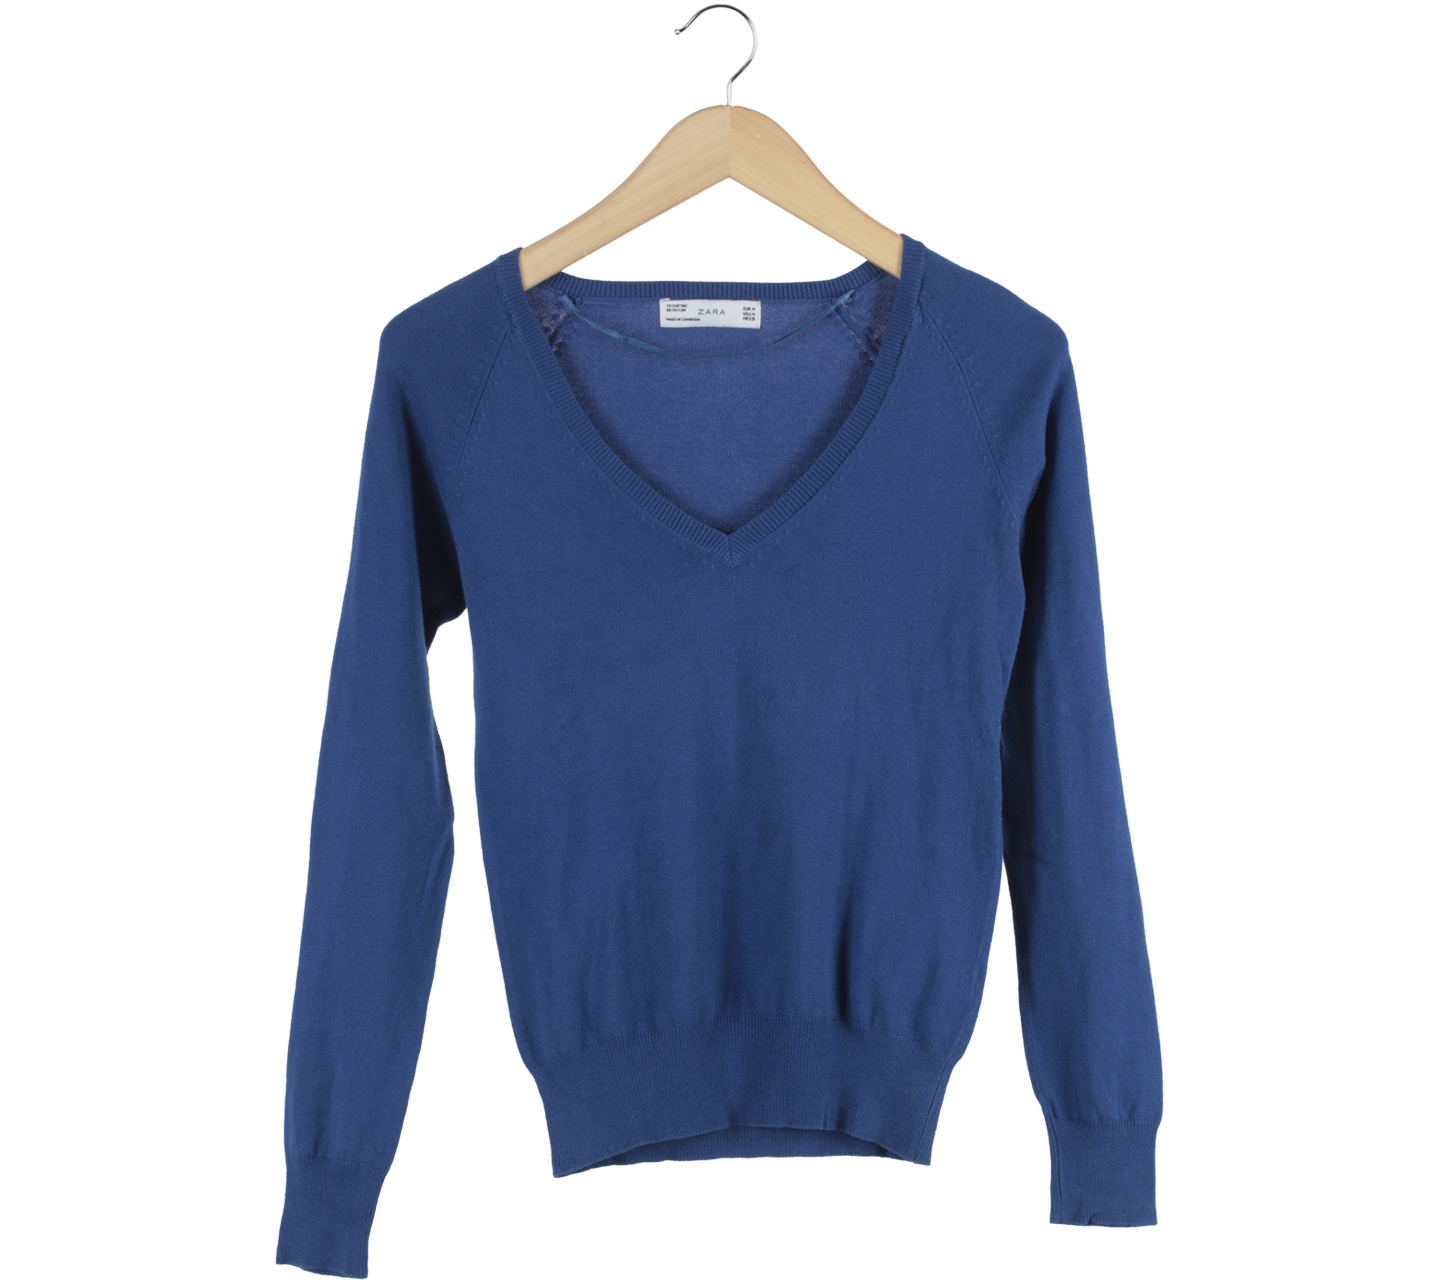 Zara Blue Sweater